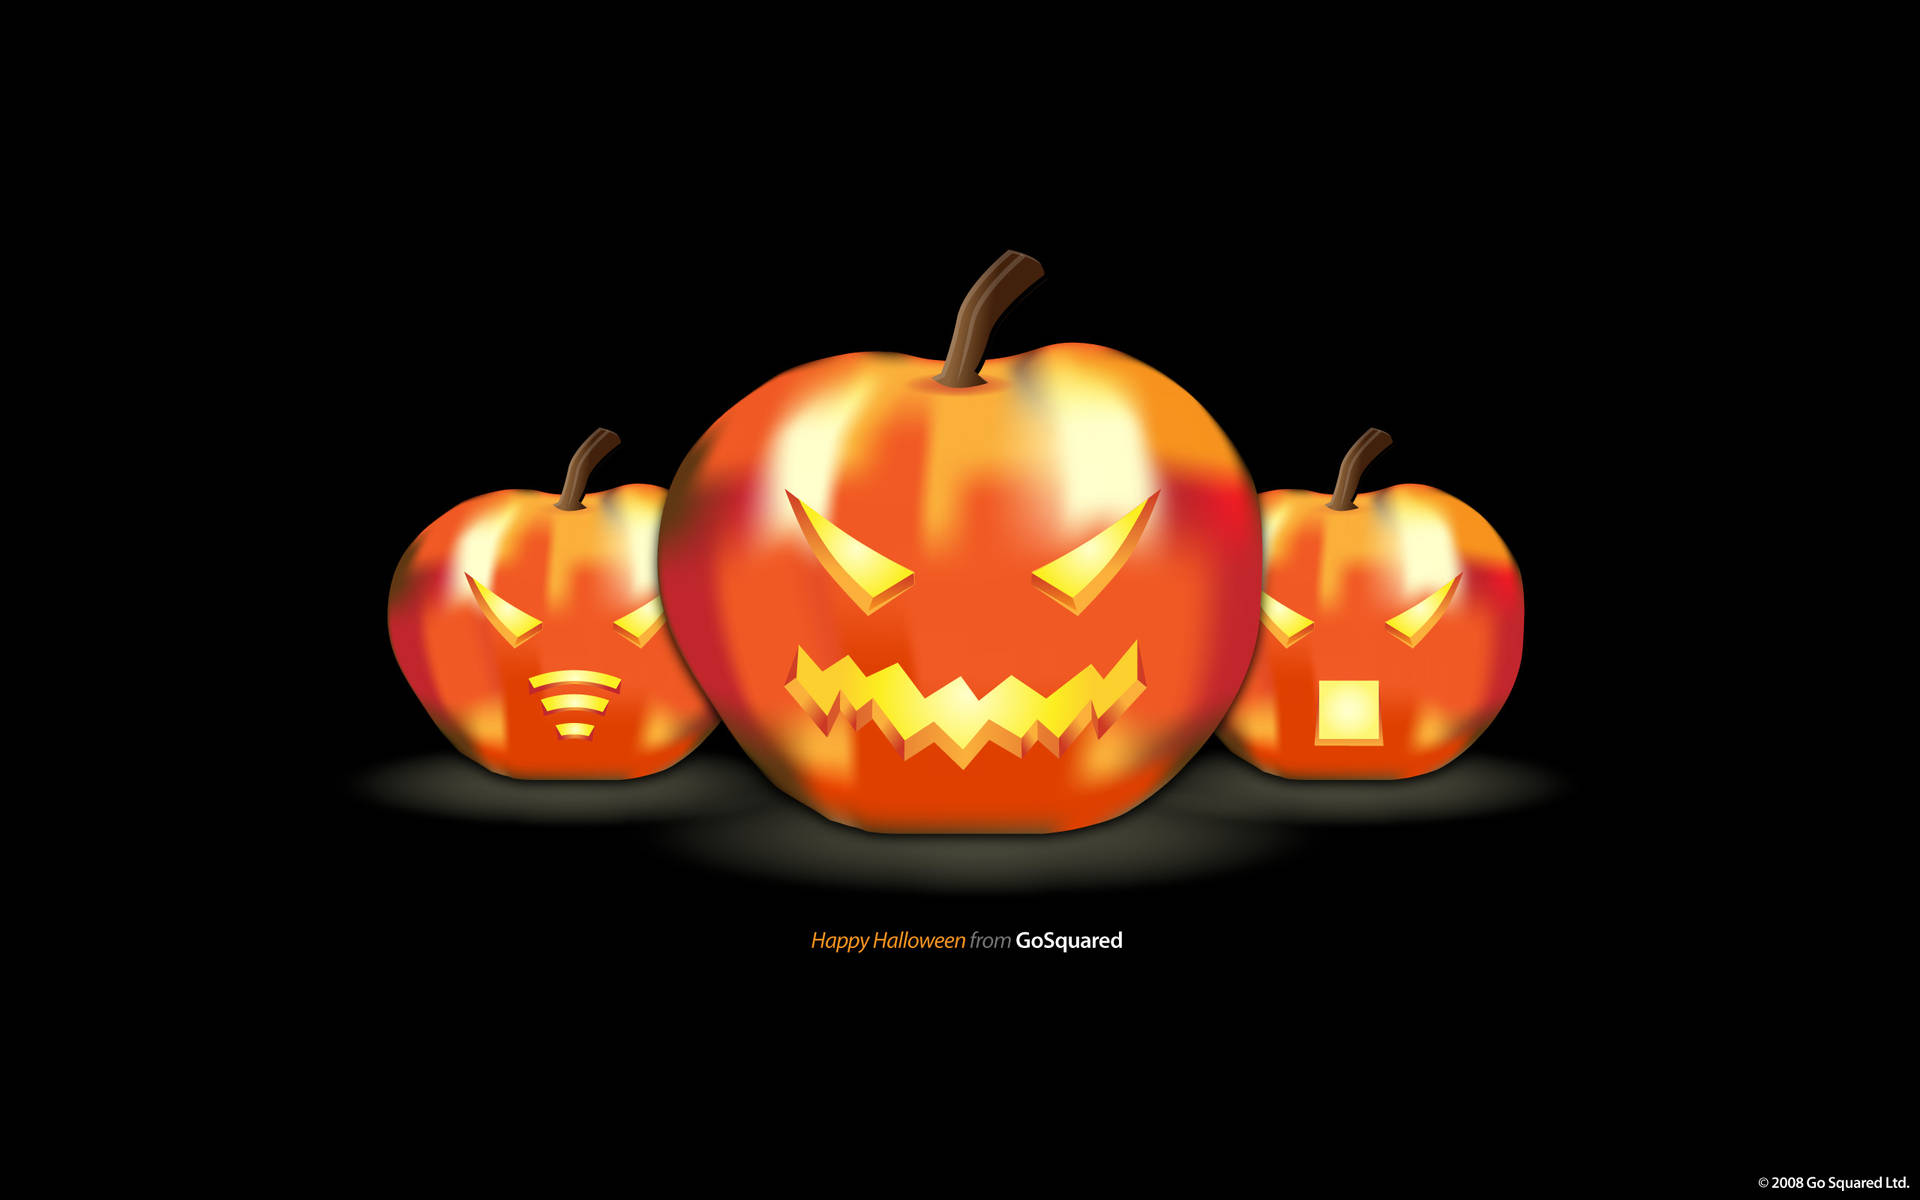 "Happy Halloween with a Jack-o-Lantern Pumpkin" Wallpaper